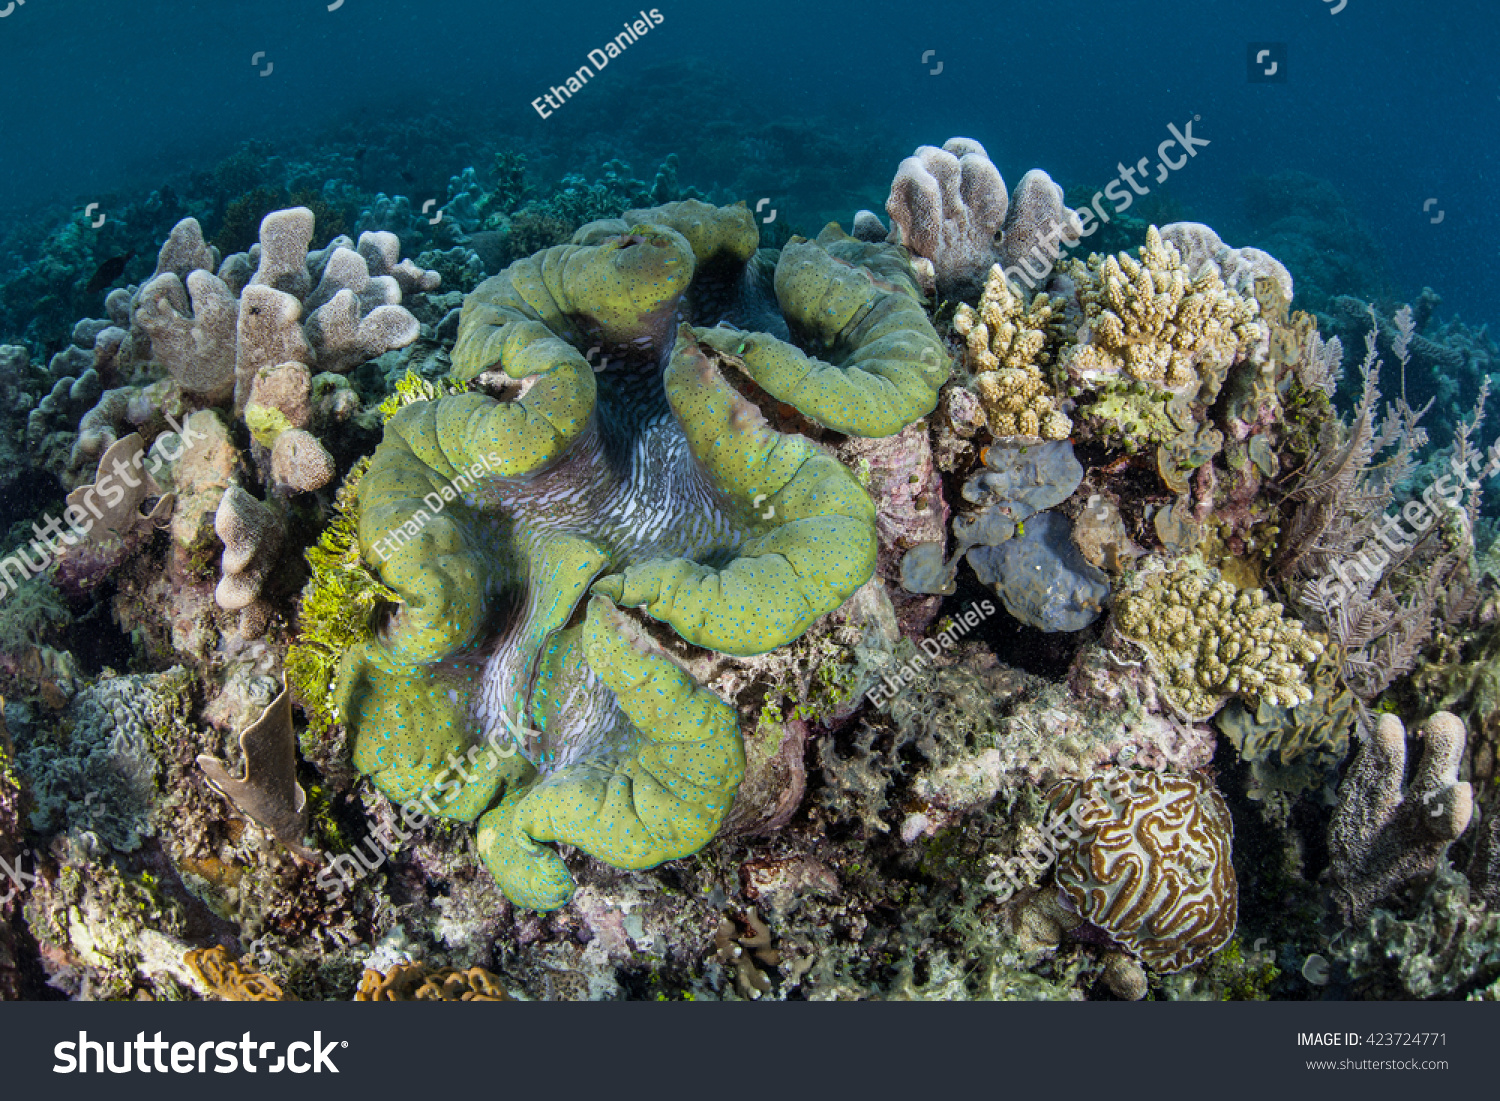 giant clam edible